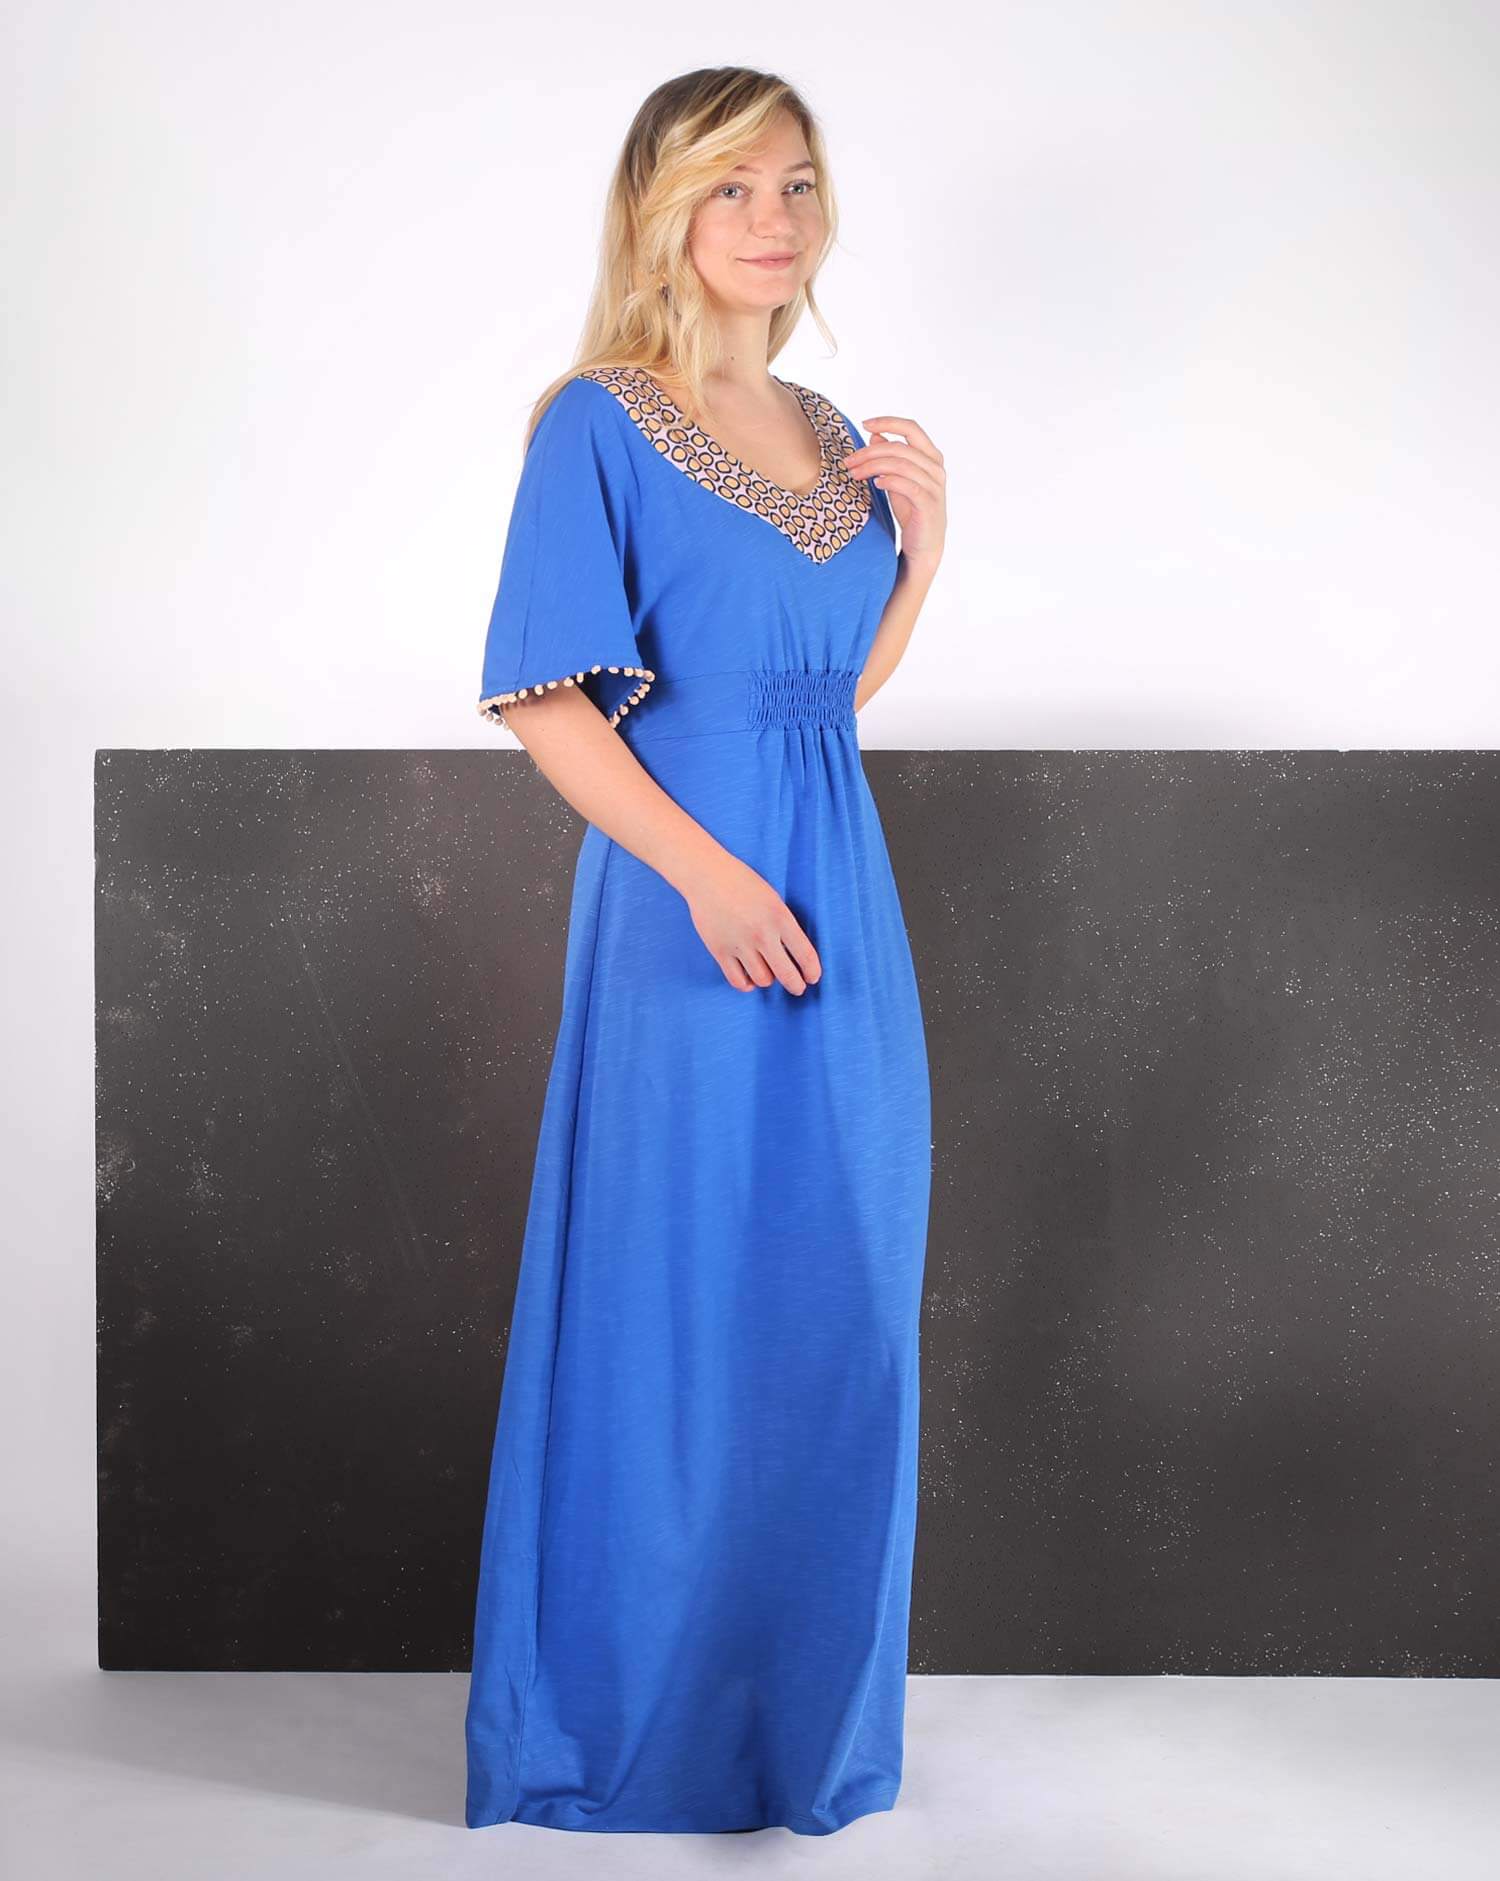 ROYAL BLUE LONG DRESS